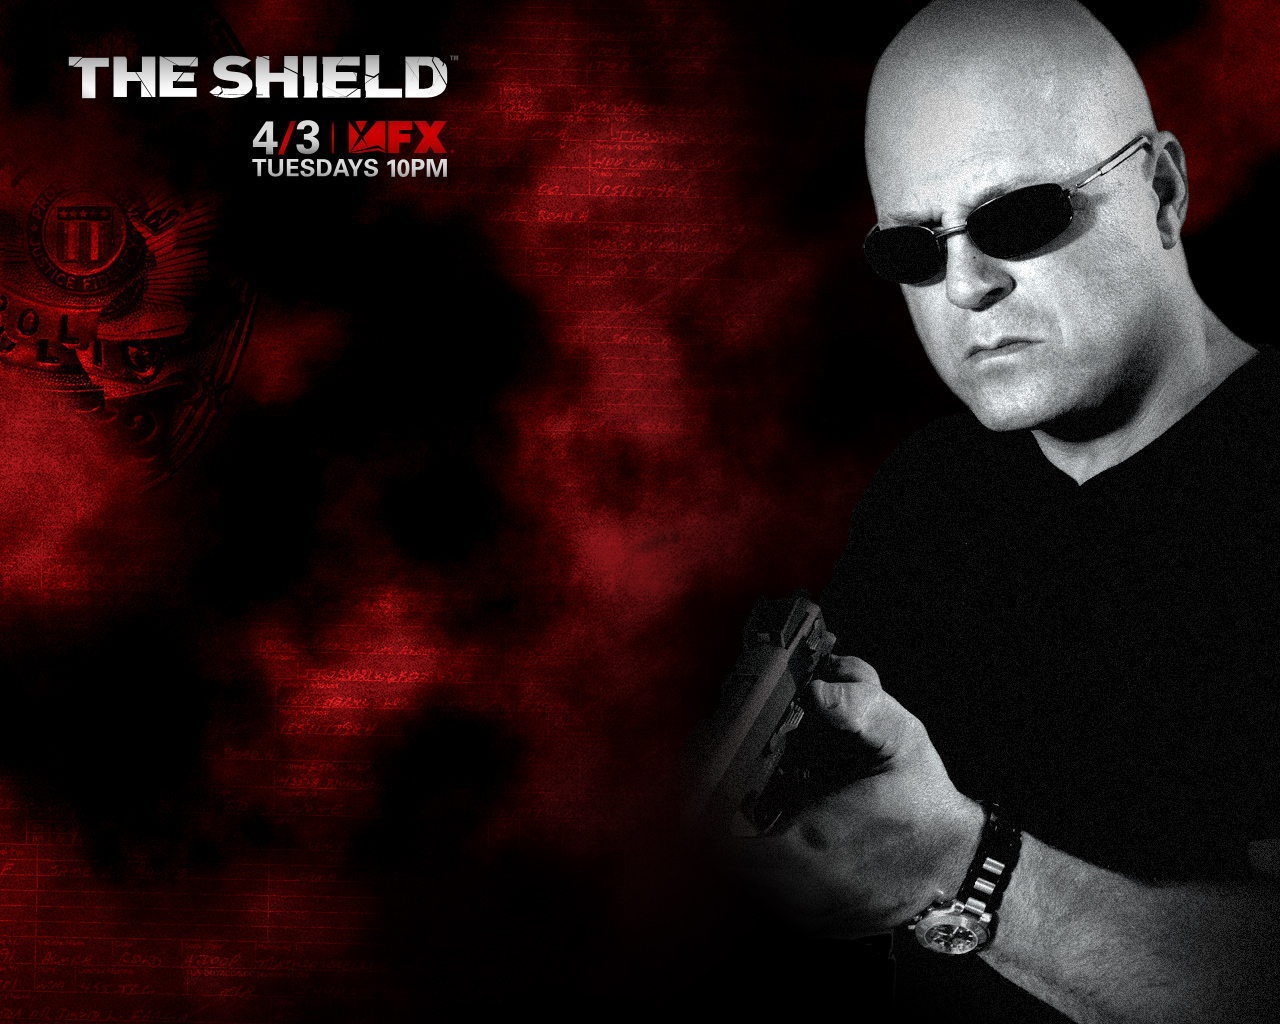 The-Shield-the-shield-2965895-1280-1024.jpg